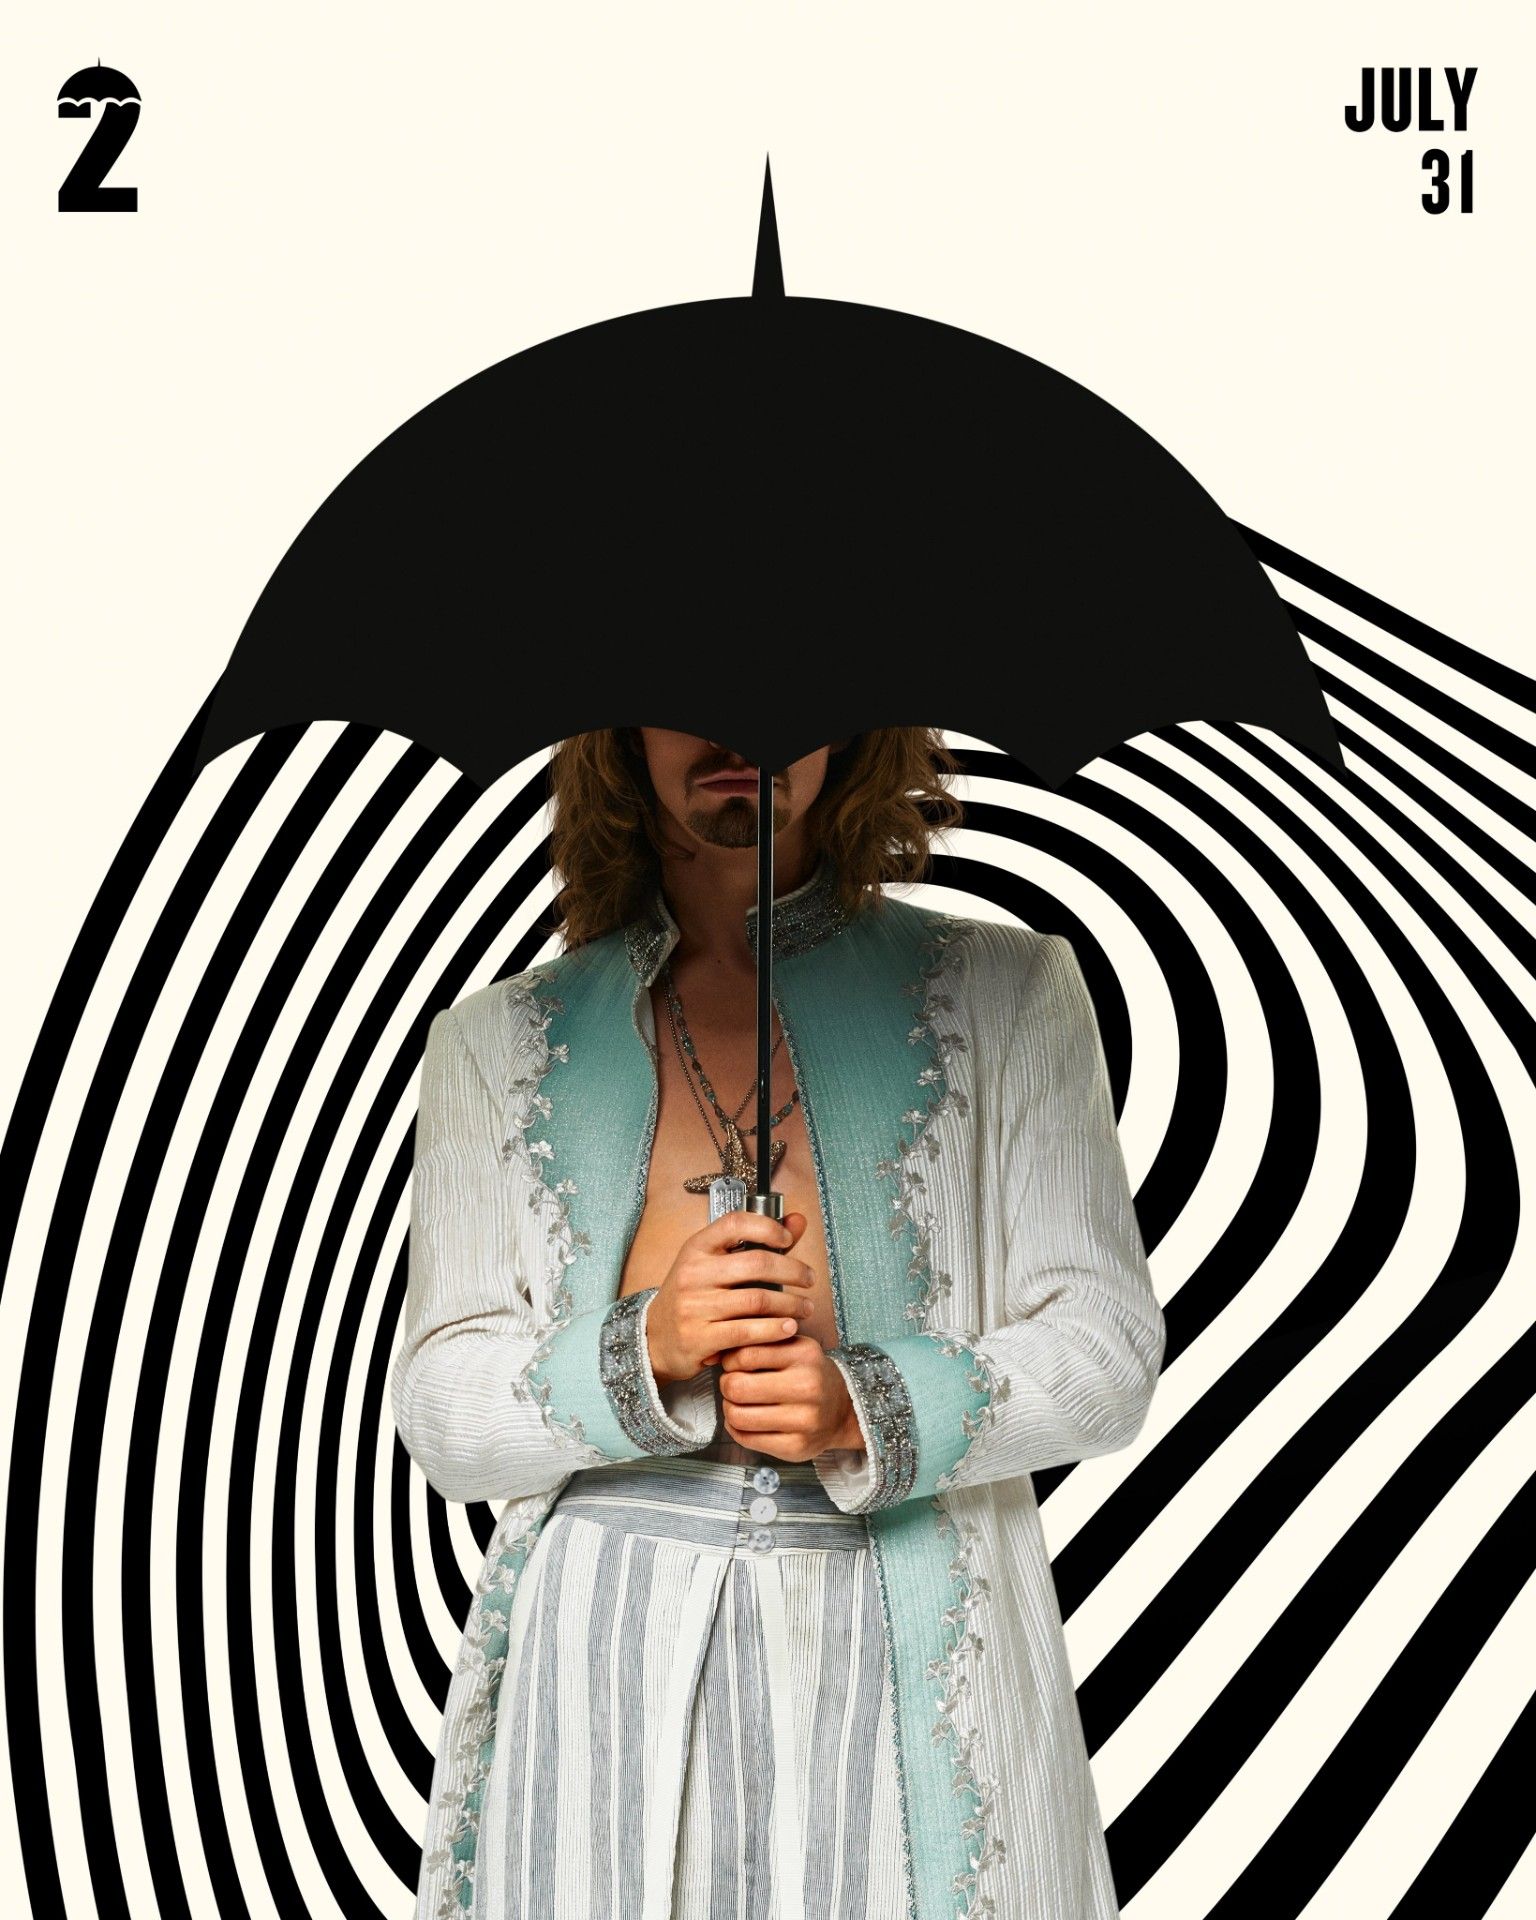 The Umbrella Academy Four Klaus poster